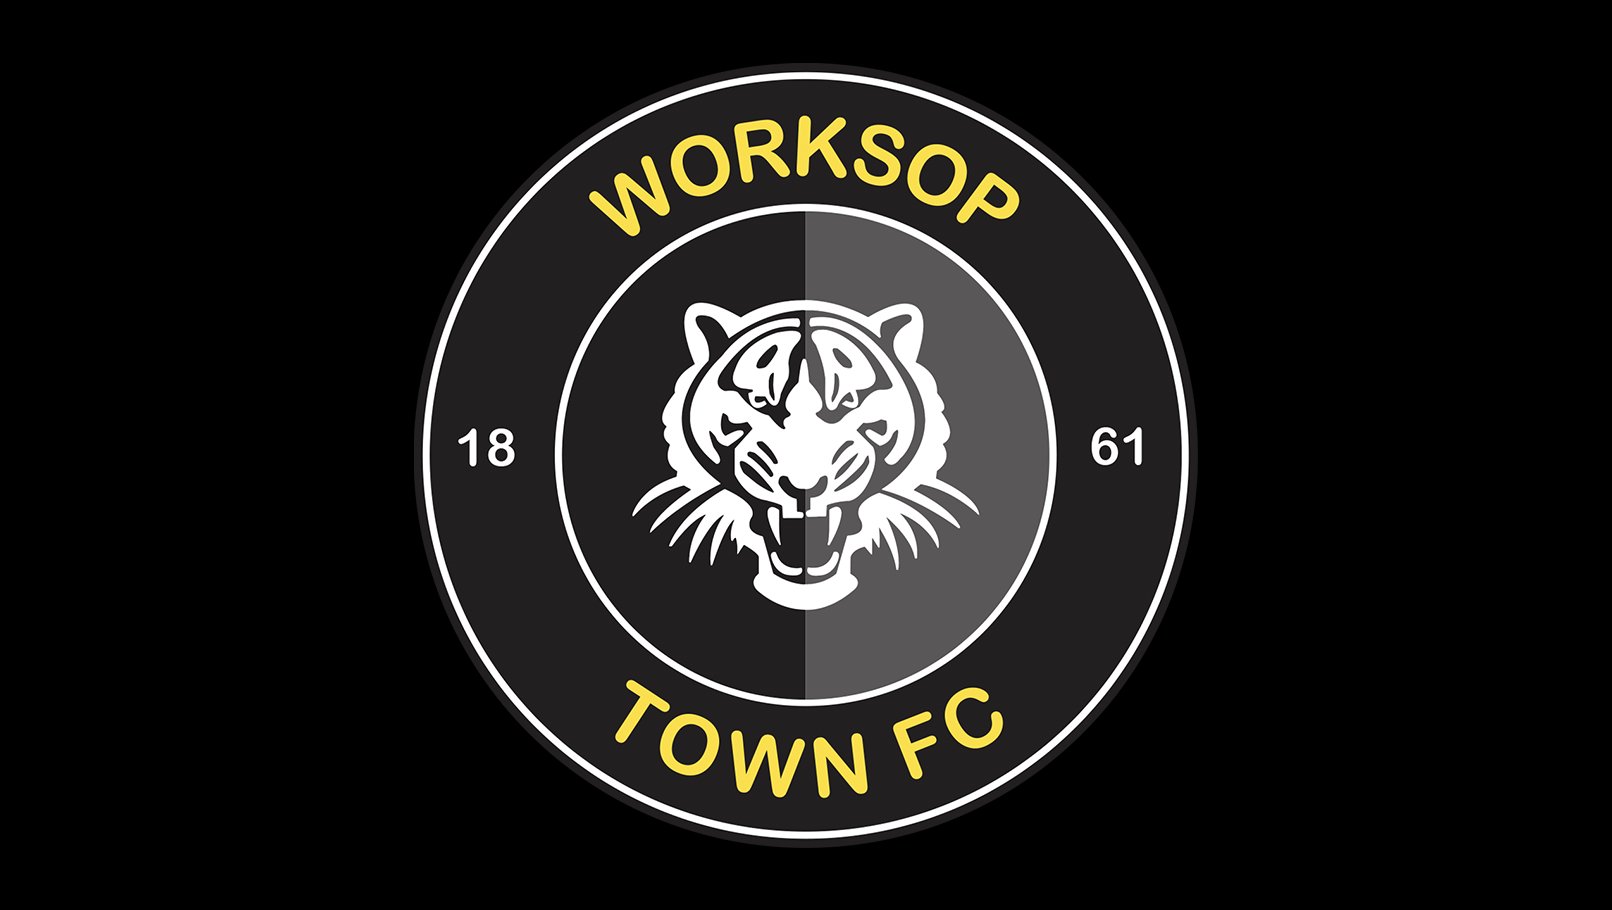 Worksop Town FC on Twitter: "Club Statement - Management Change https://t.co/wlIbsR48Pp https://t.co/31I4hvoMXQ" / Twitter